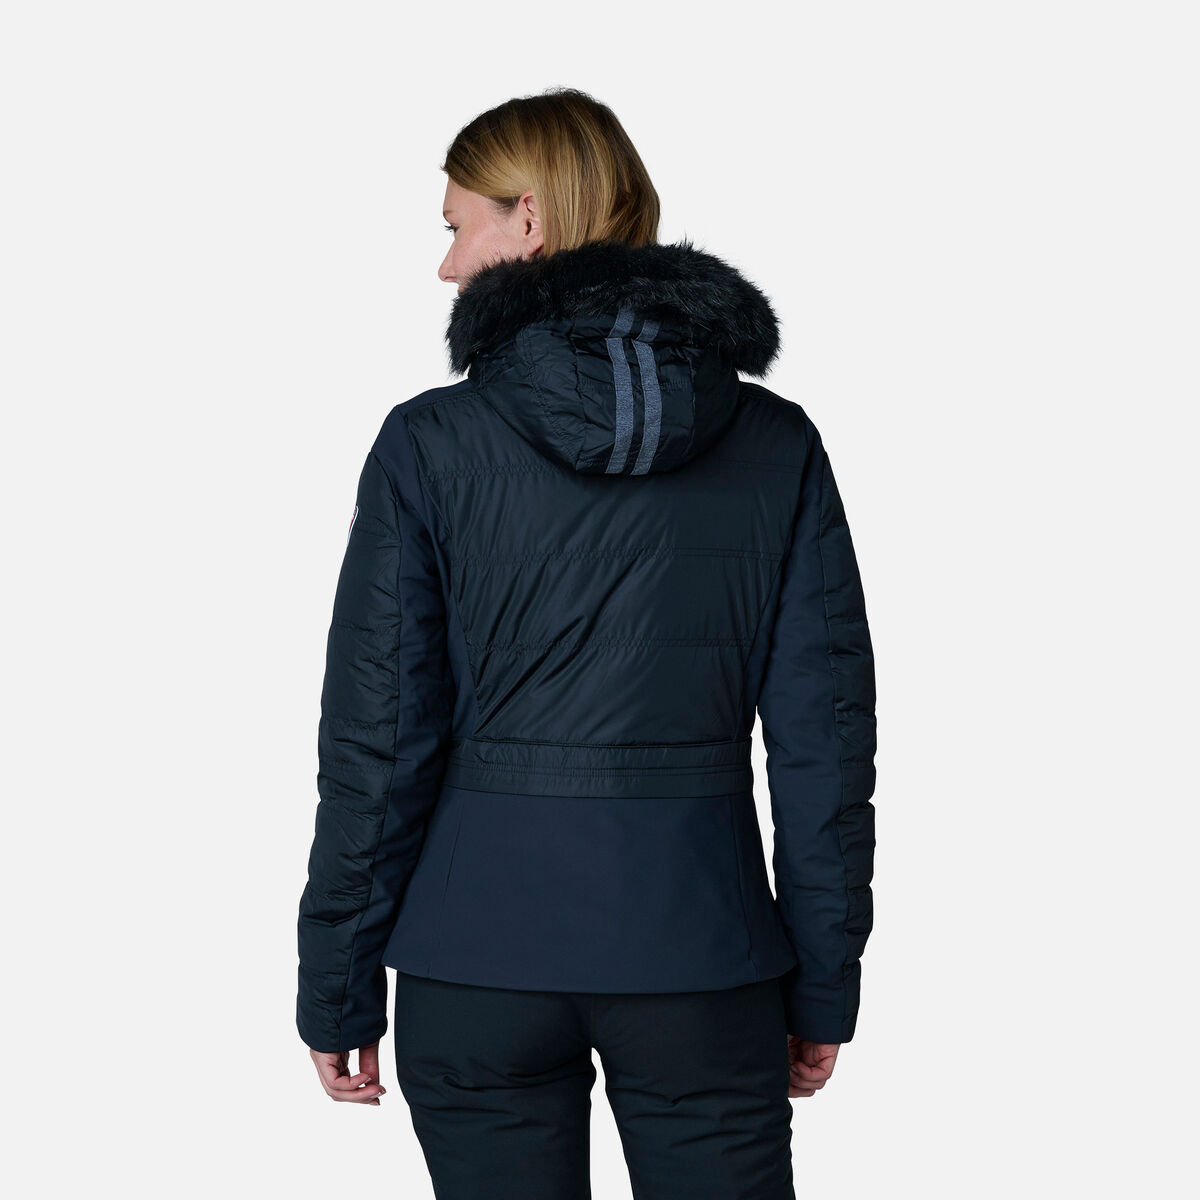 Women's Victoire Hybrid Ski Jacket